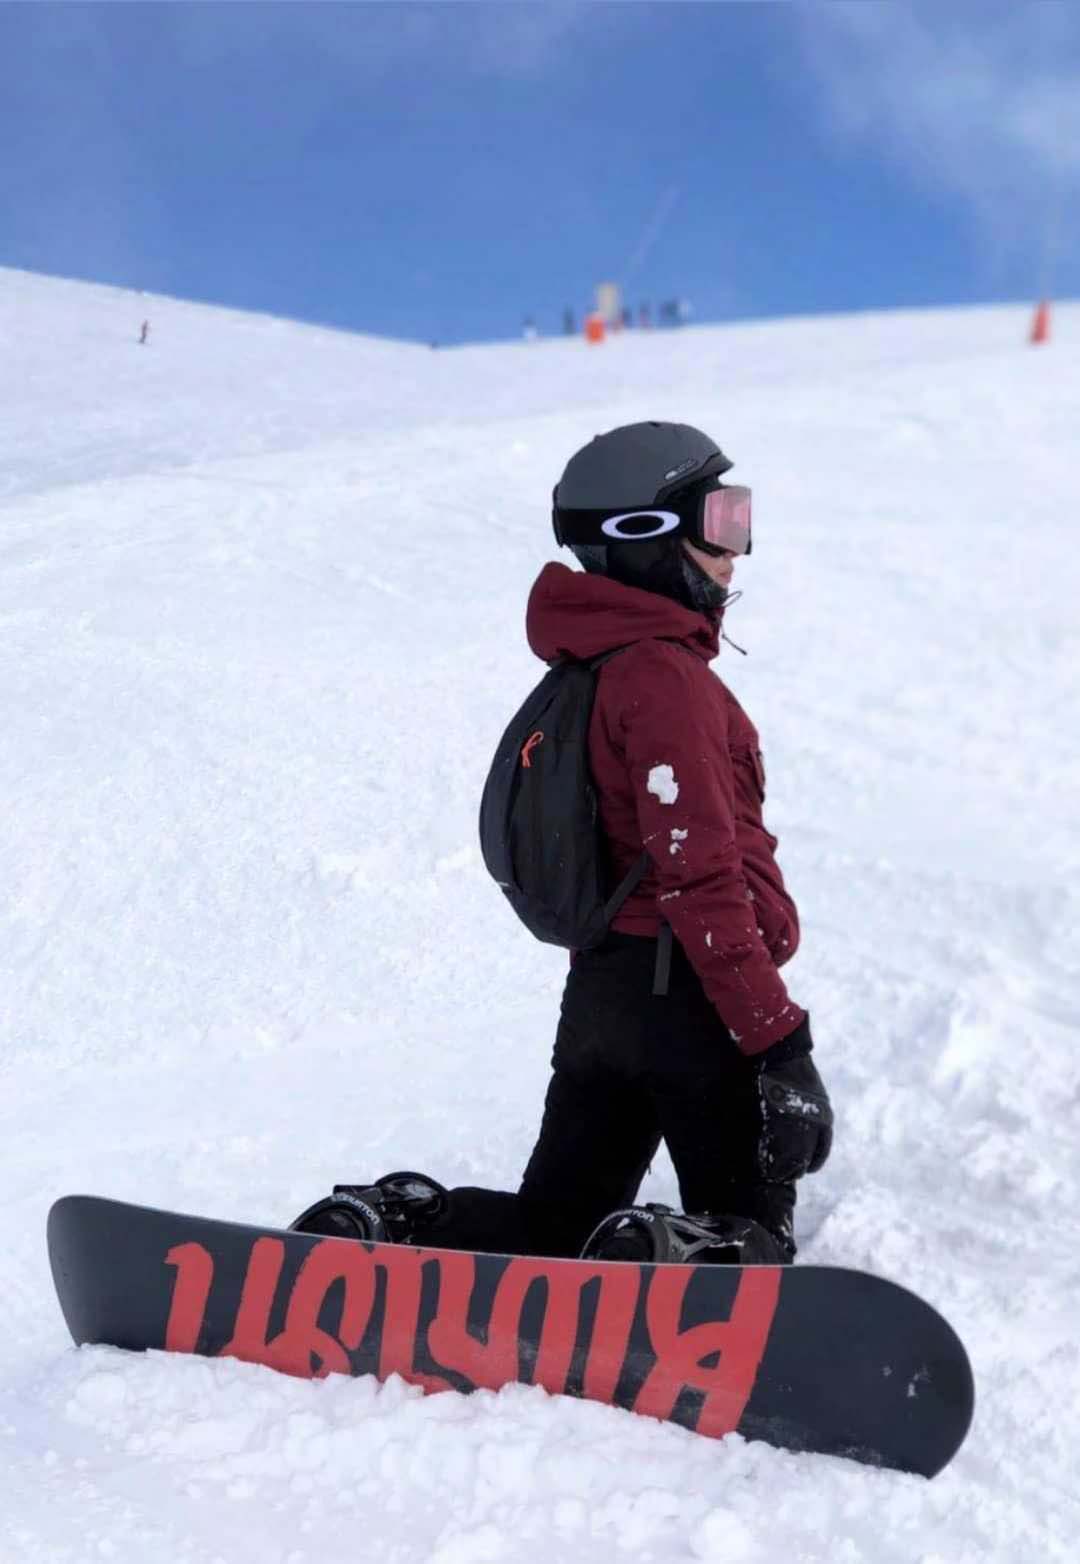 Collega Lichelle op d'r snowboard